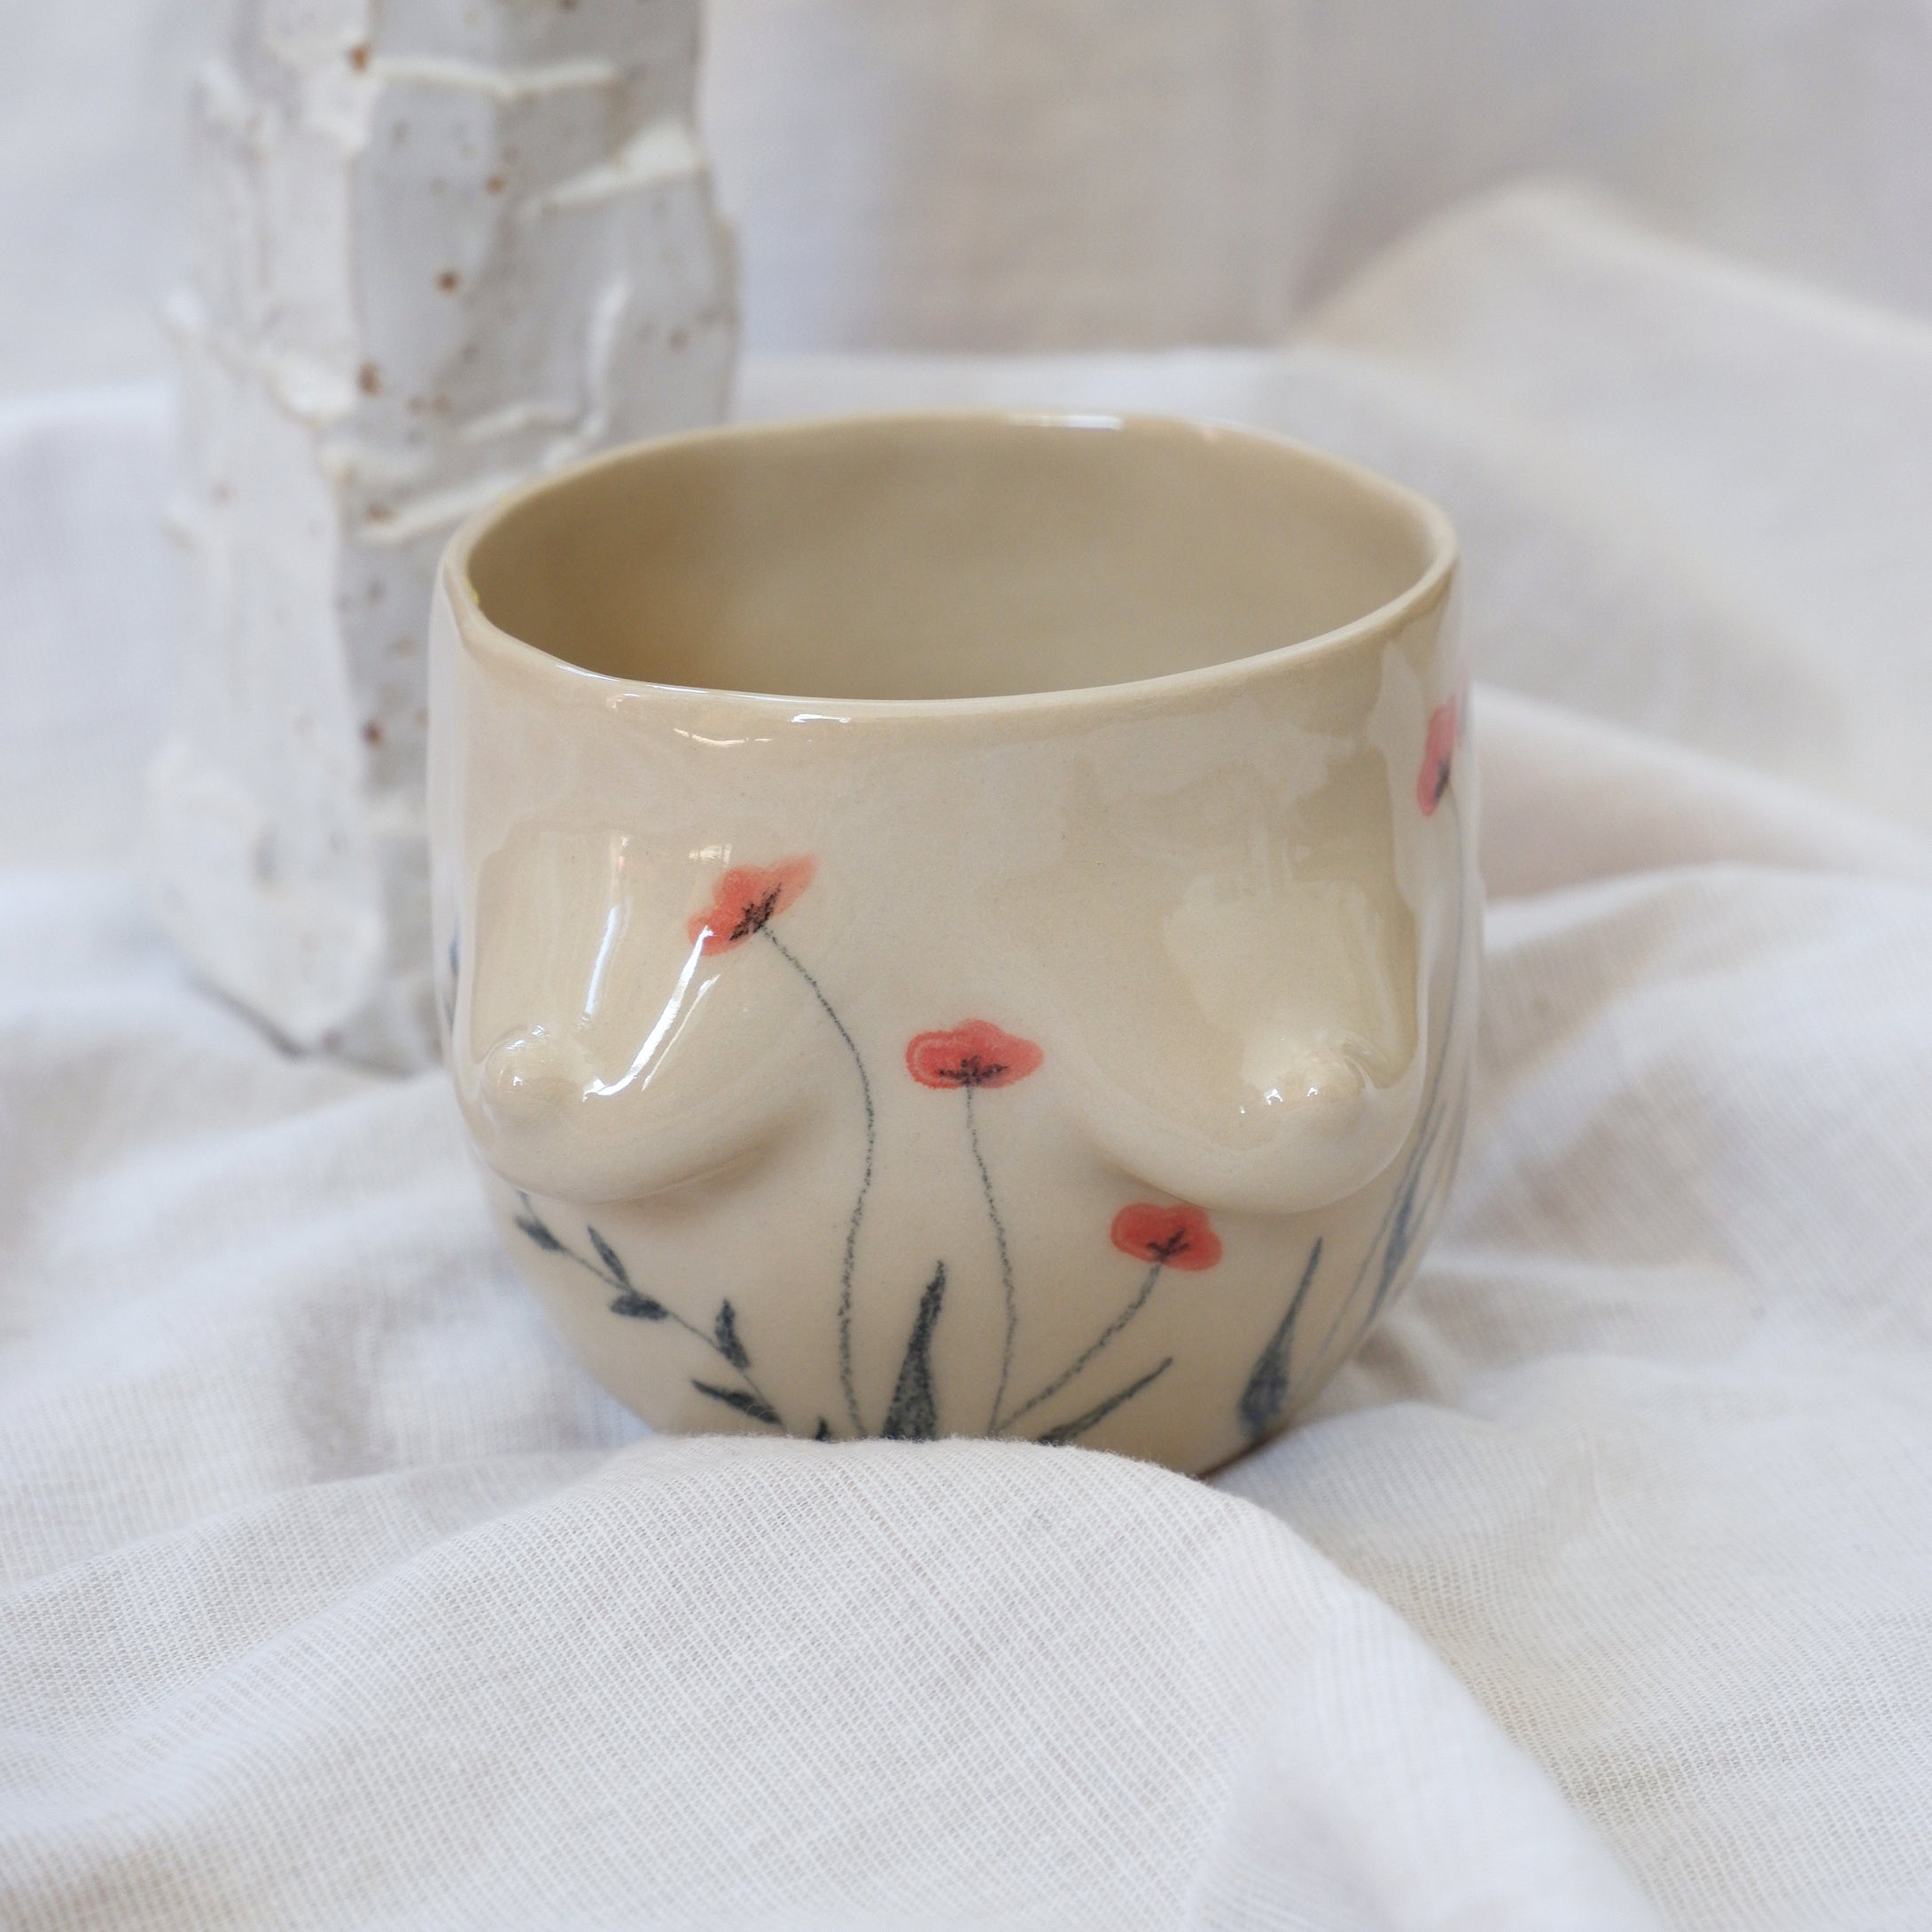 Beige mug with flowers drawn by hand 🌱